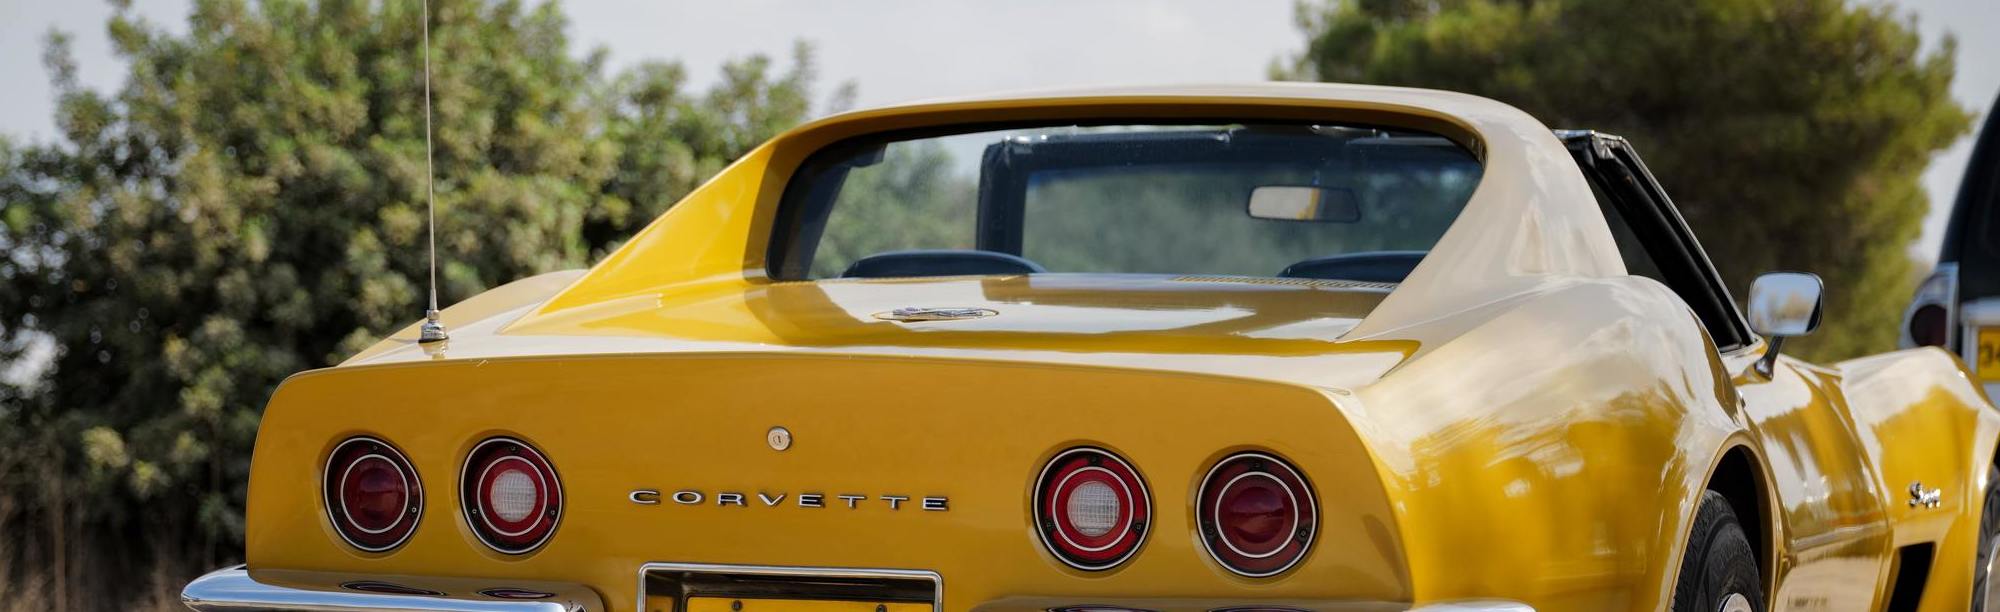 Yellow C3 Corvette T-top rear